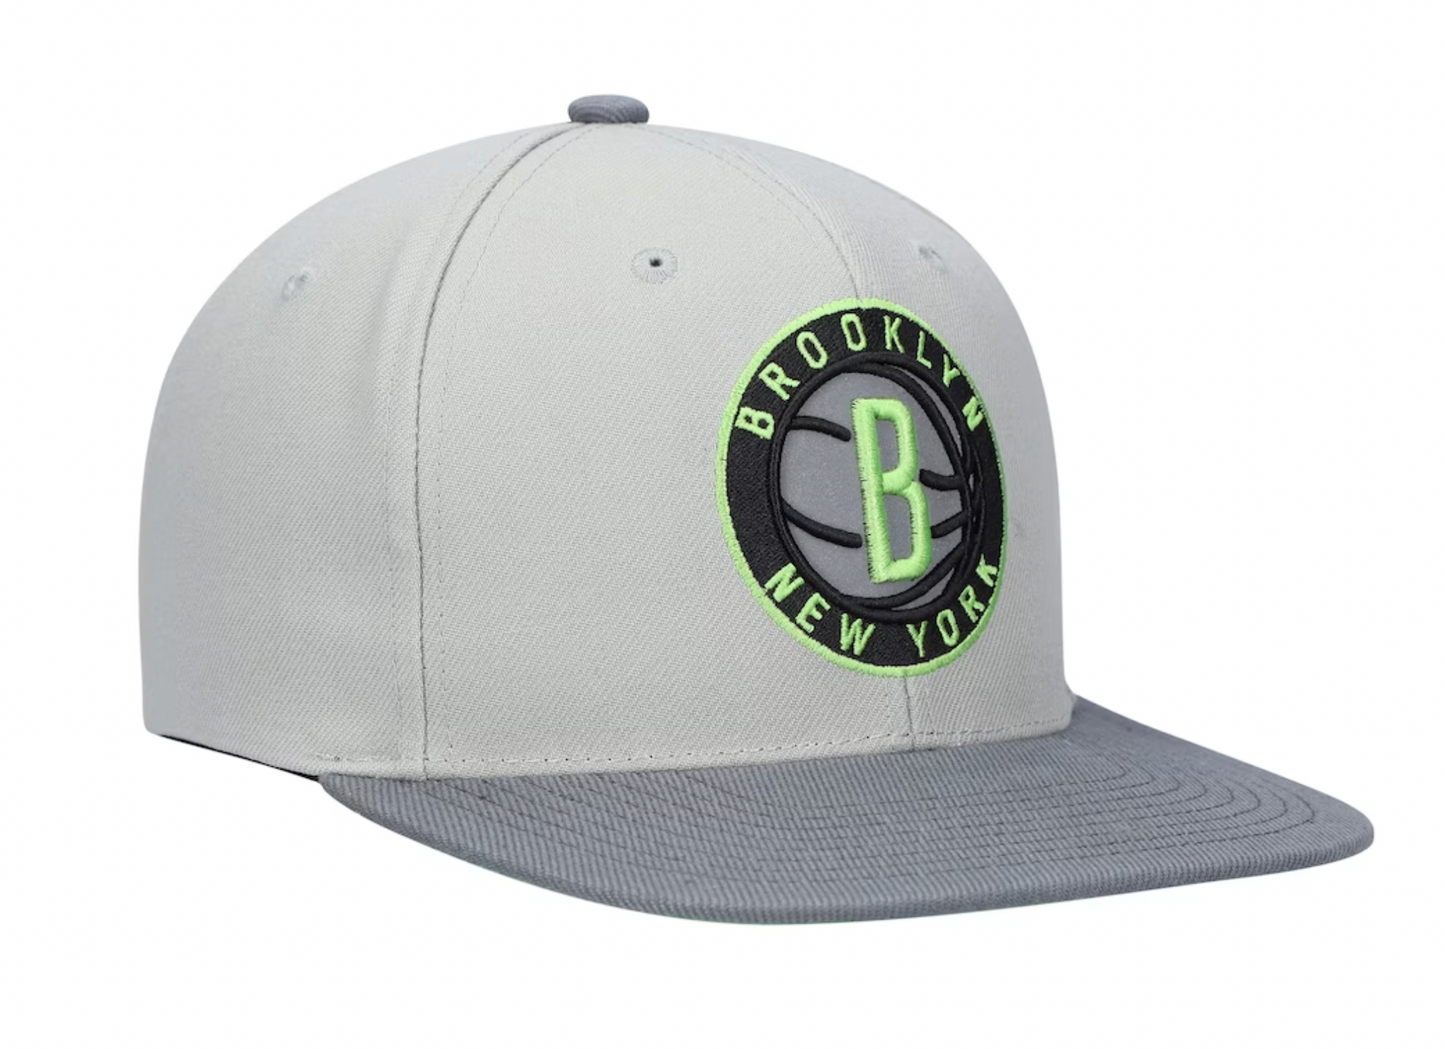 Men's Mitchell & Ness Brooklyn Nets NBA Green Bean Adjustable Snapback Hat